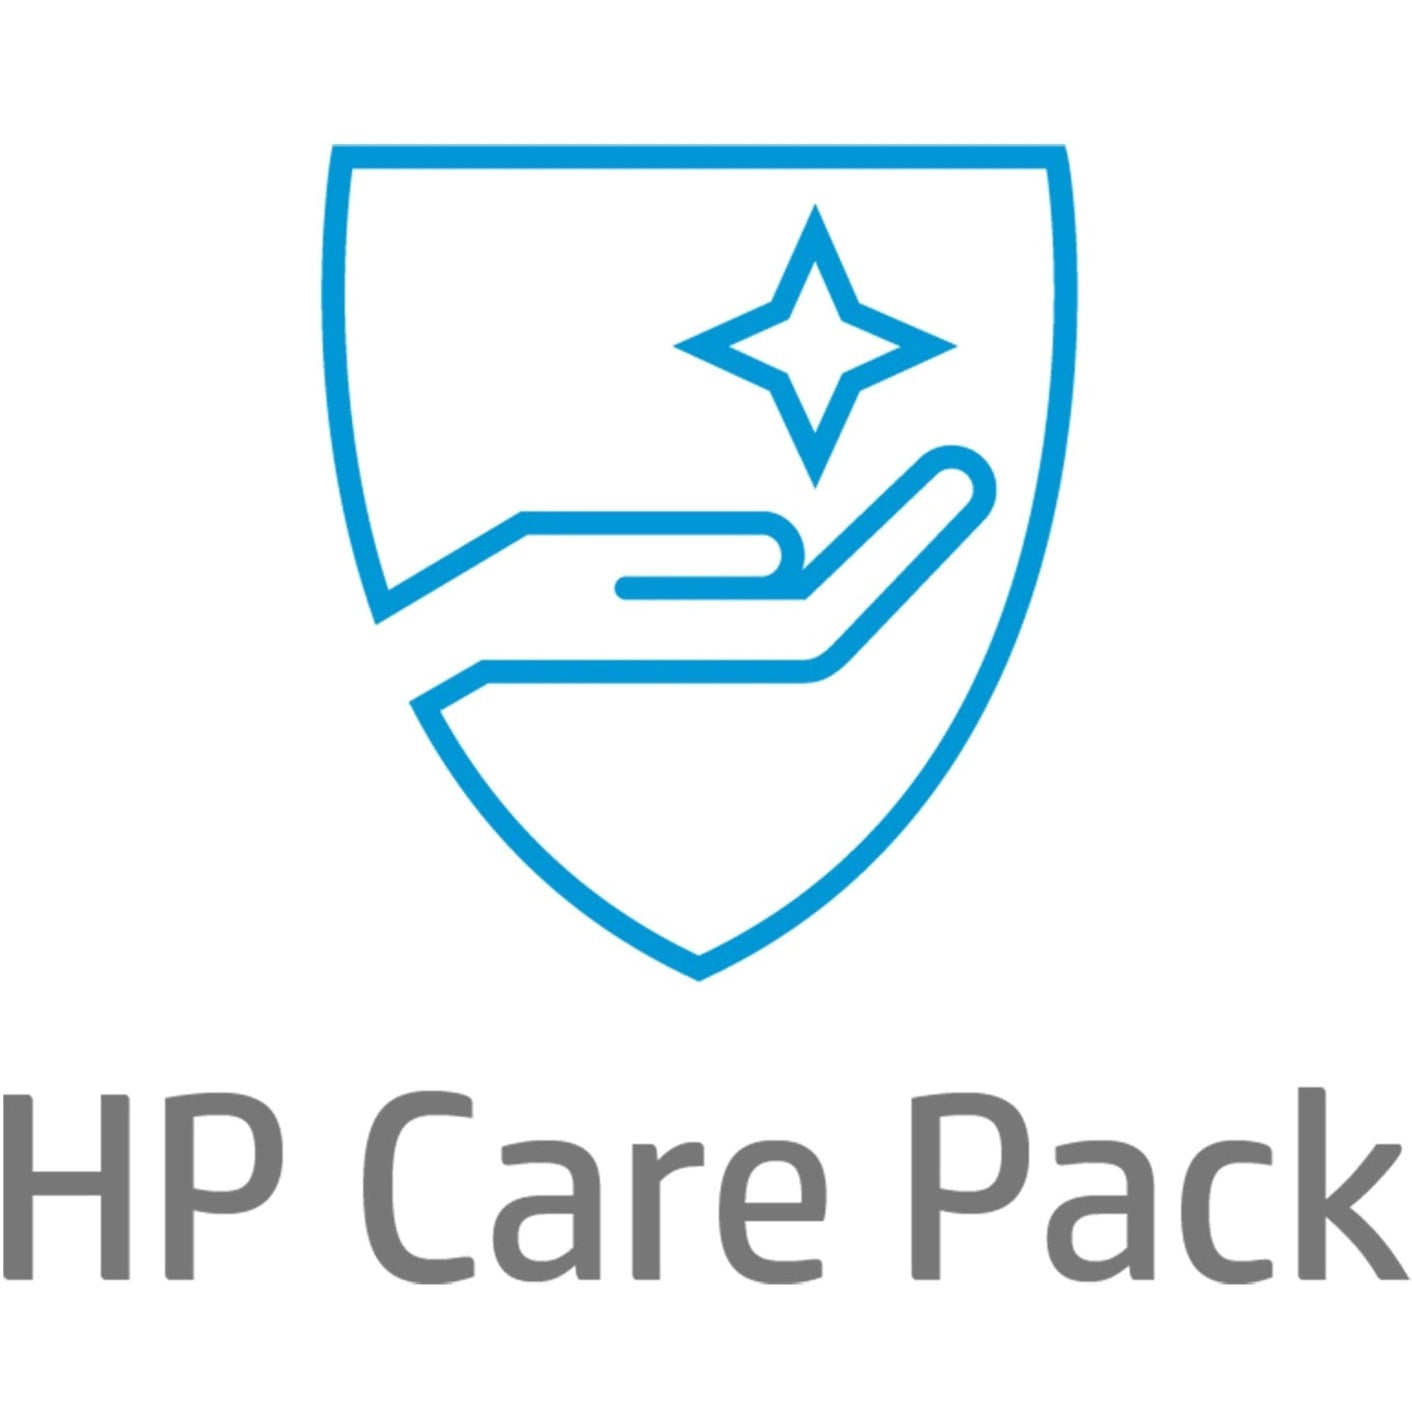 HP Care Pack - 4 Year - Warranty (UL785E)